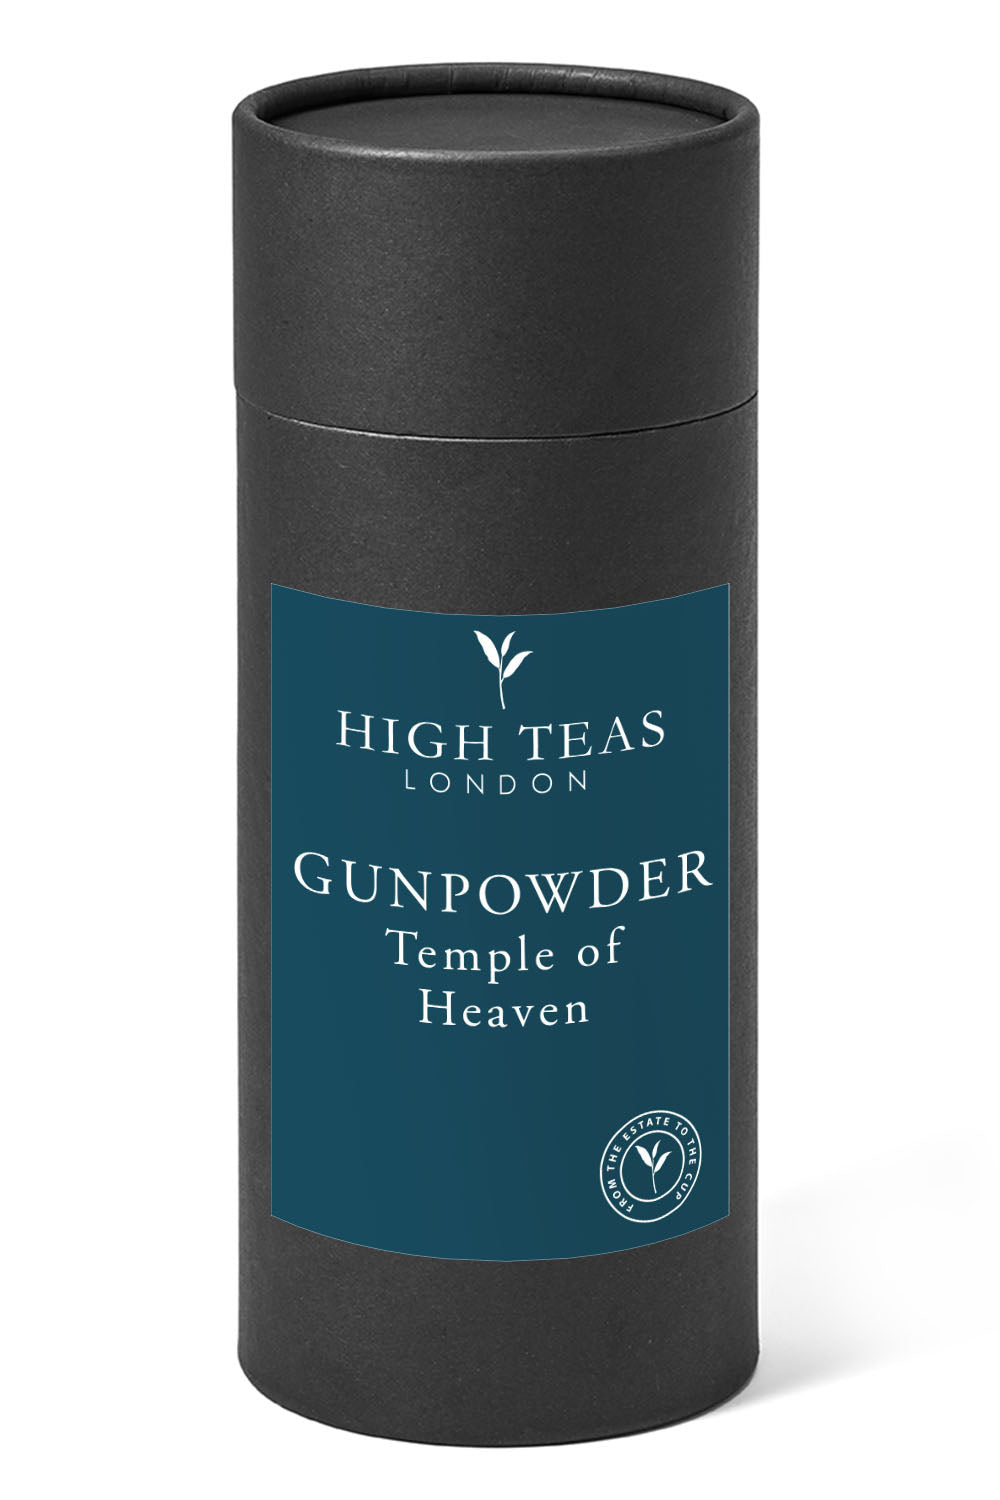 Gunpowder "TEMPLE OF HEAVEN"-150g gift-Loose Leaf Tea-High Teas